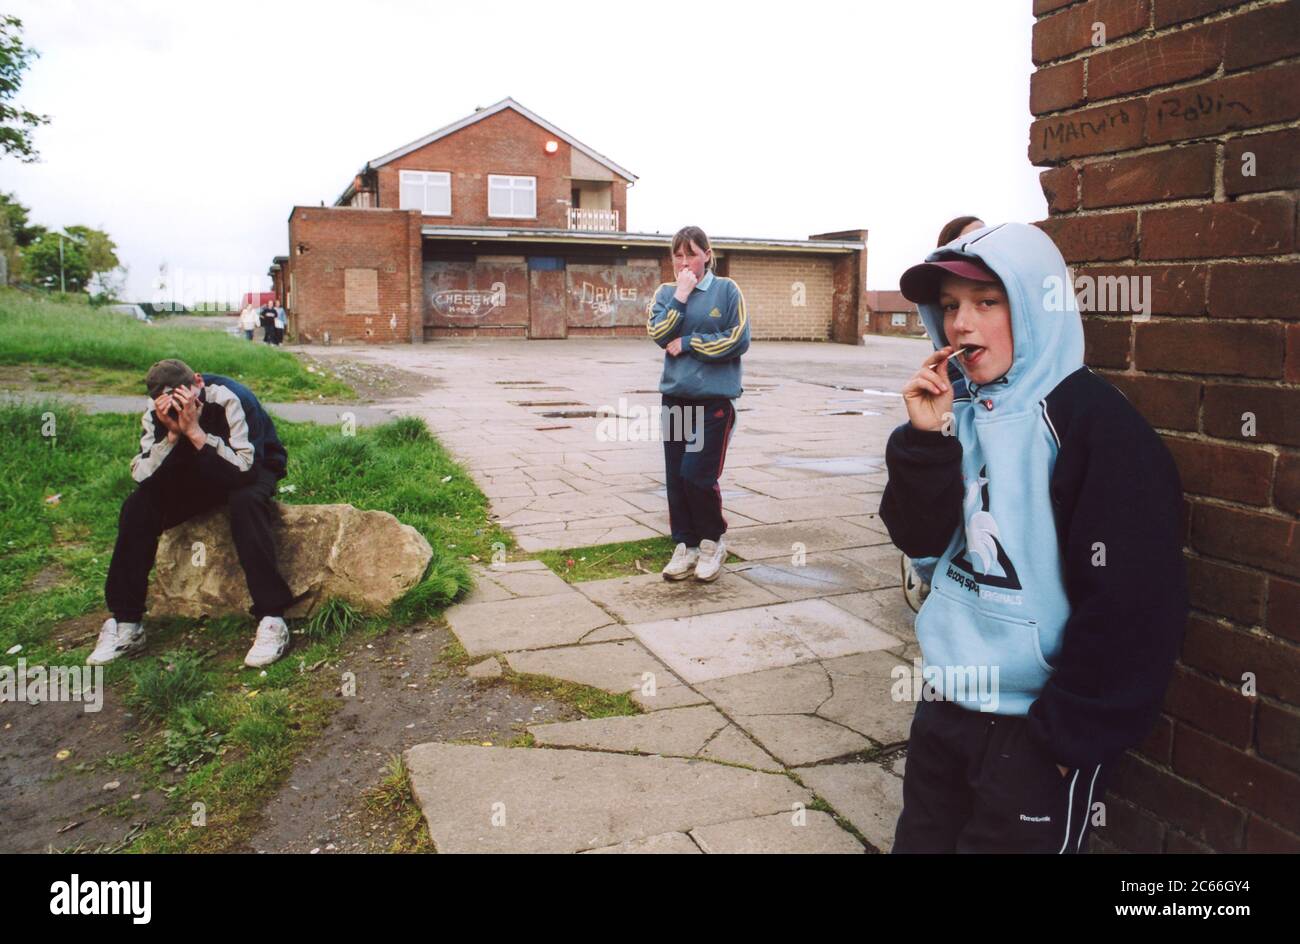 Teenage children hanging around outside youth club; run down council housing estate; Bradford UK Stock Photo